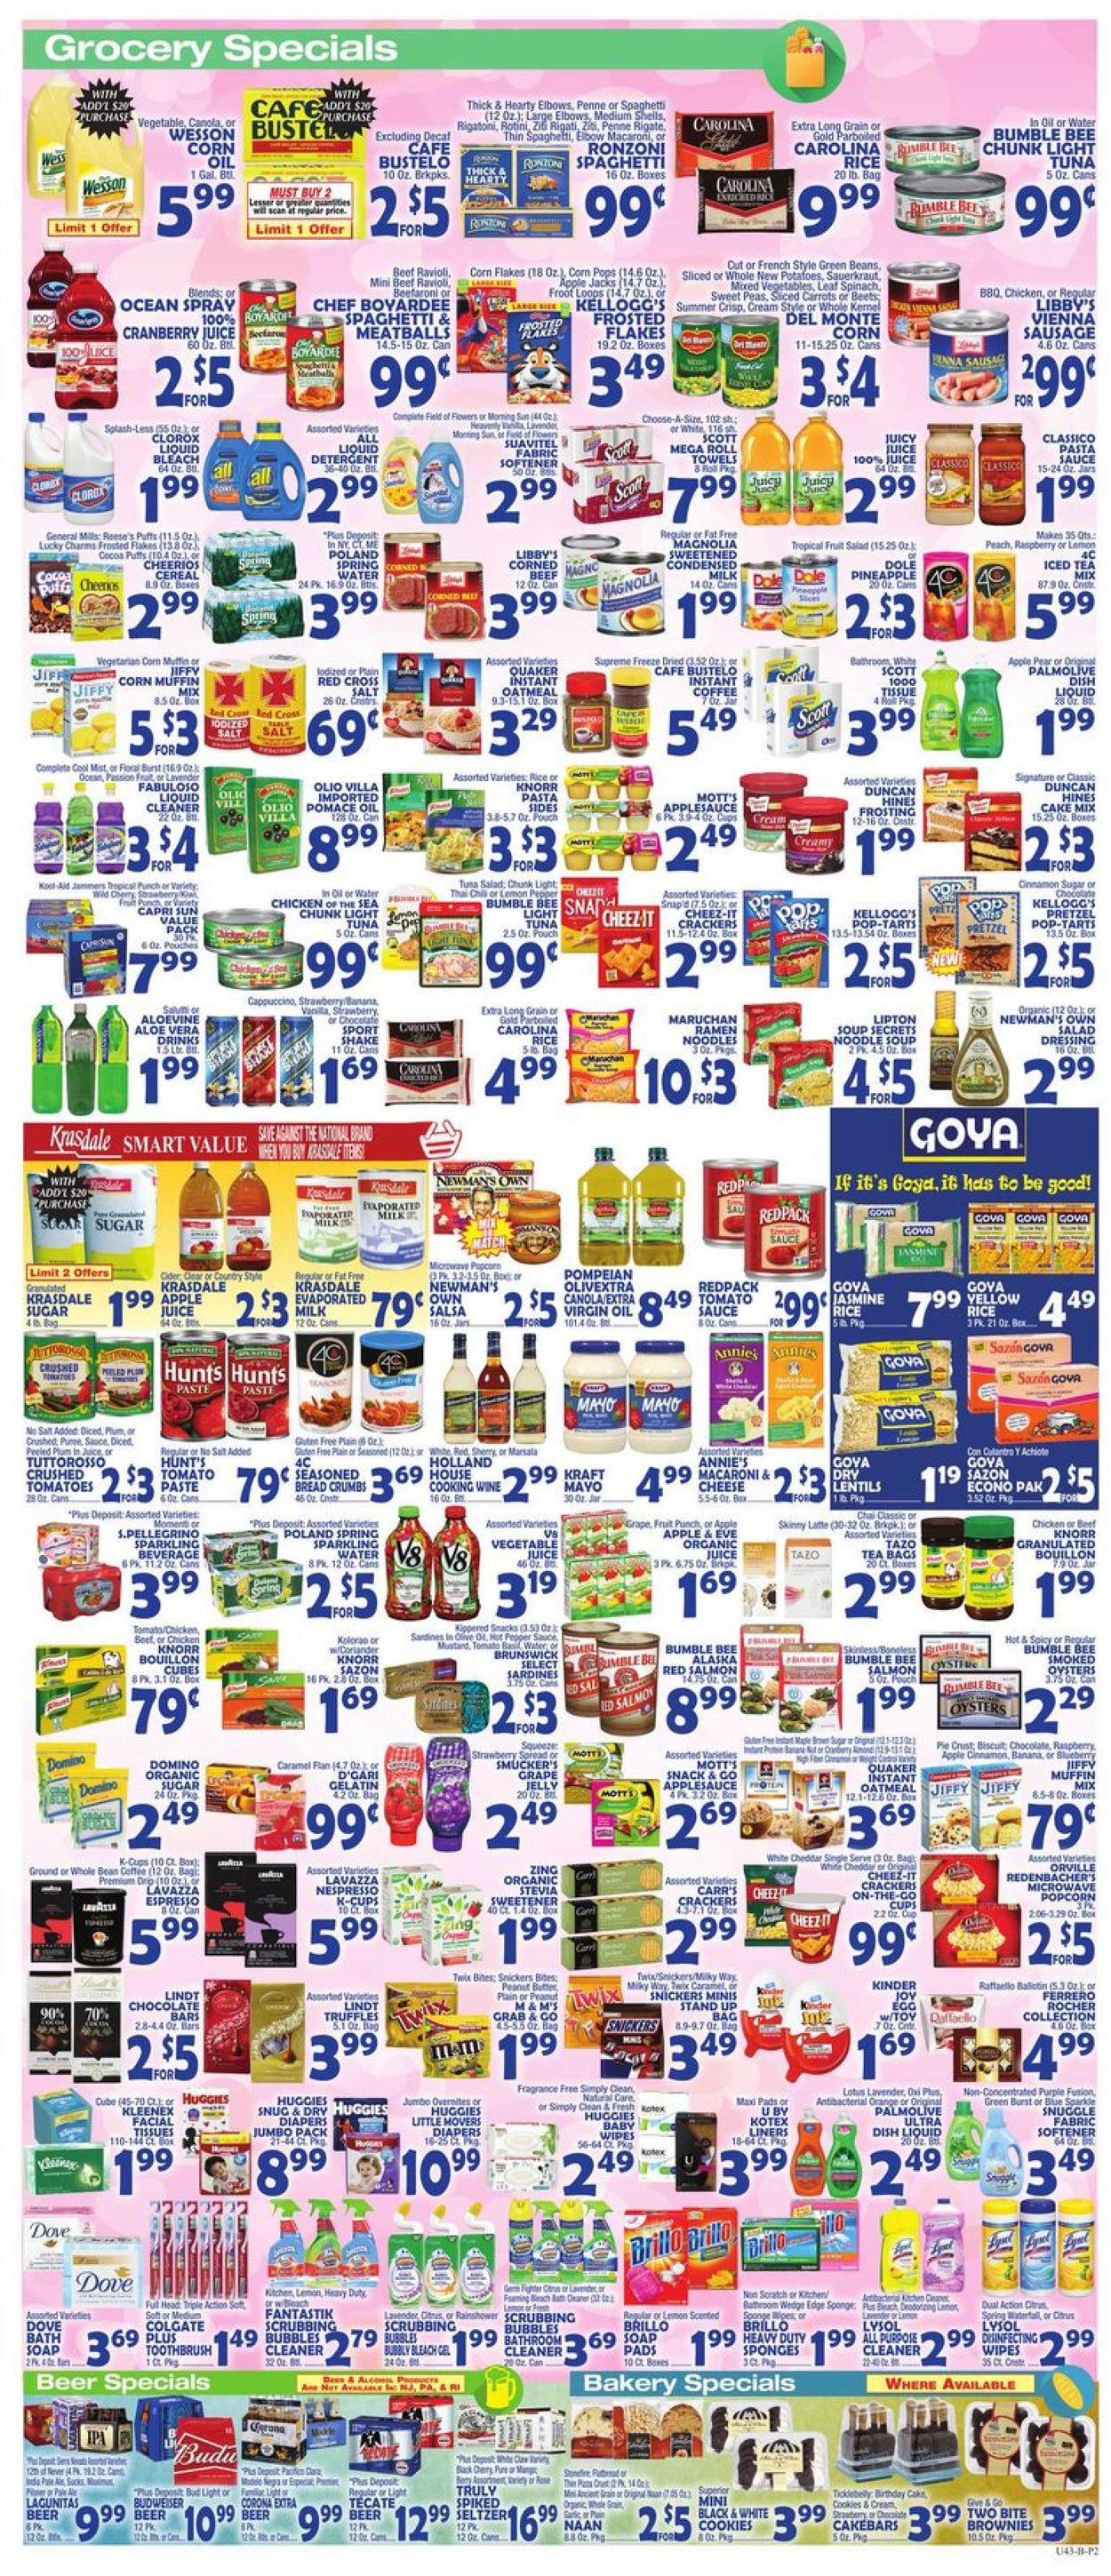 Catalogue Bravo Supermarkets from 02/07/2020